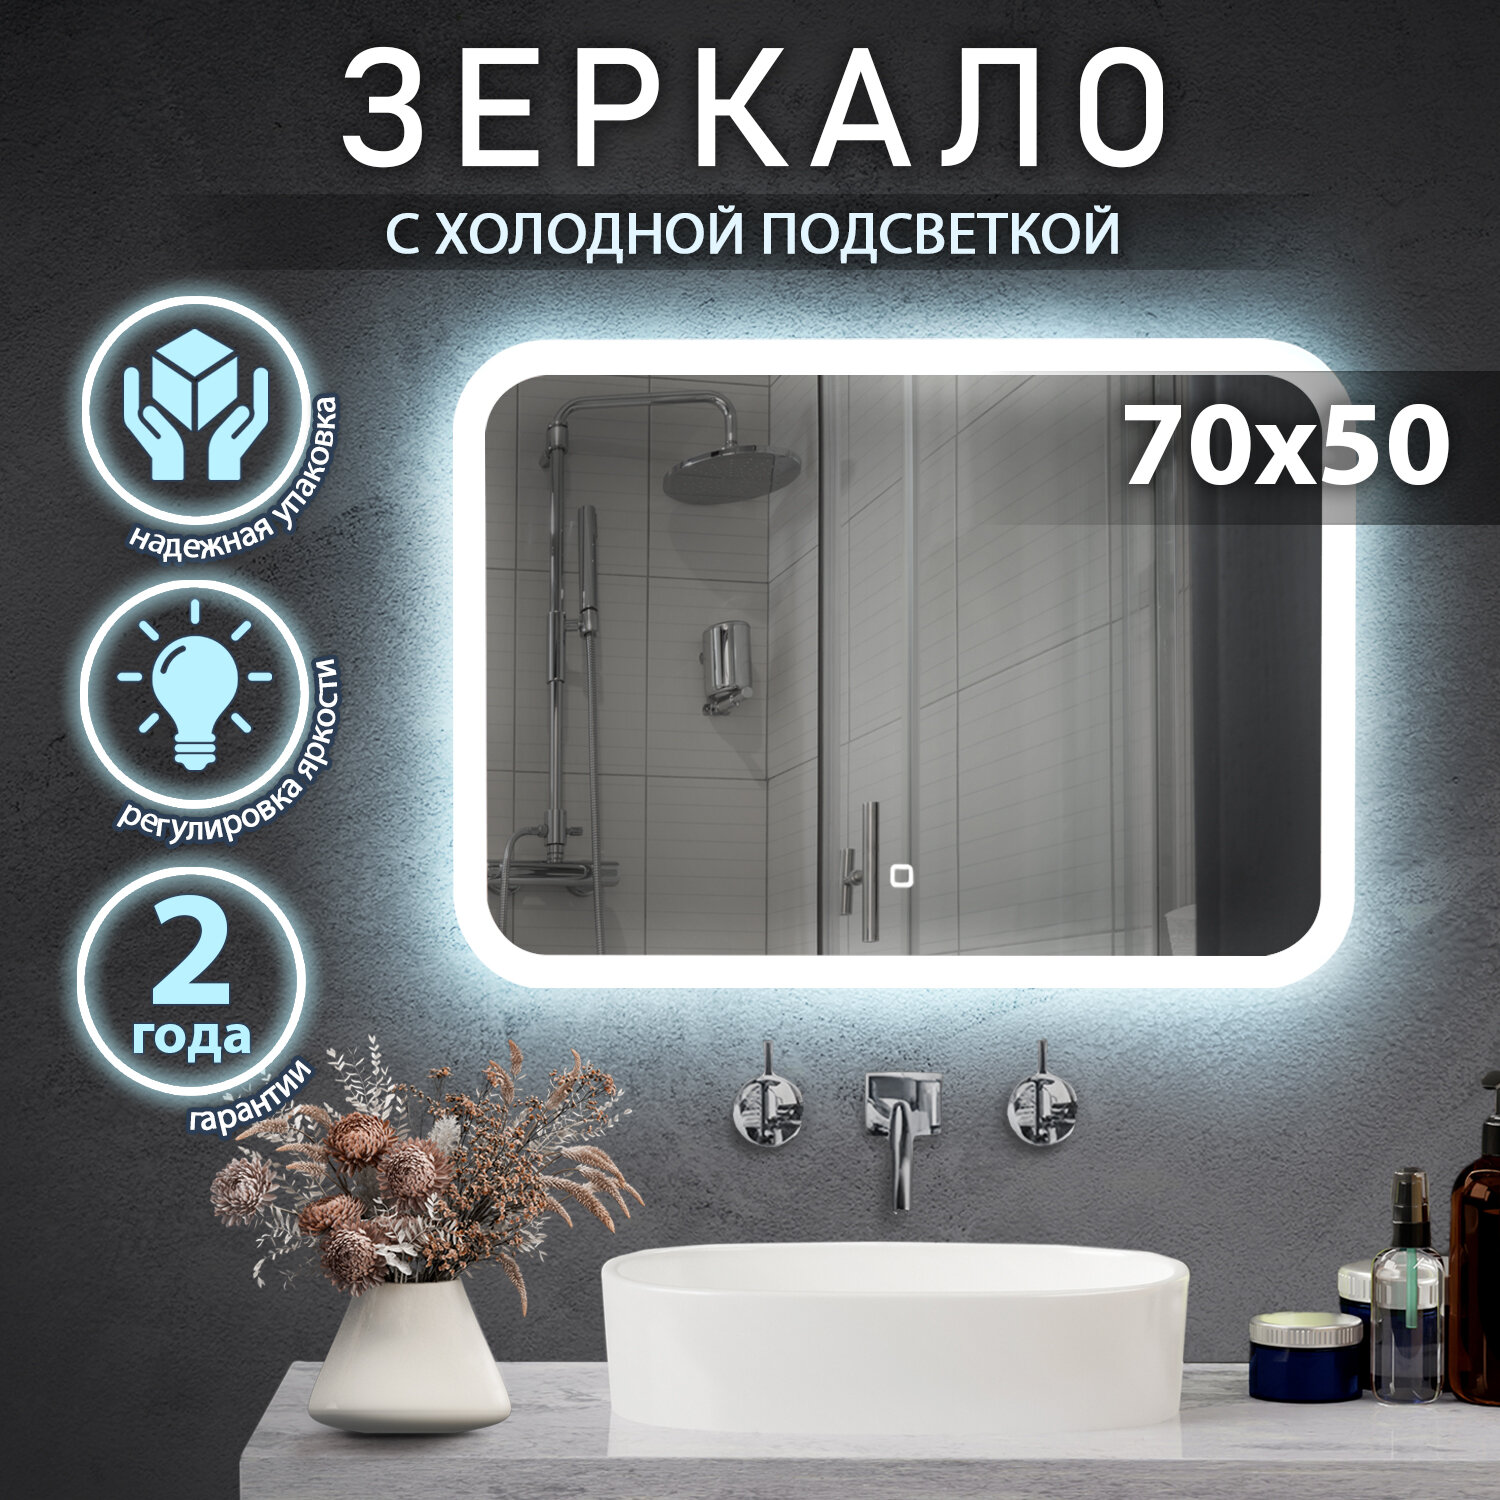 Зеркало для ванной Джобс с подсветкой 70х50 6000К